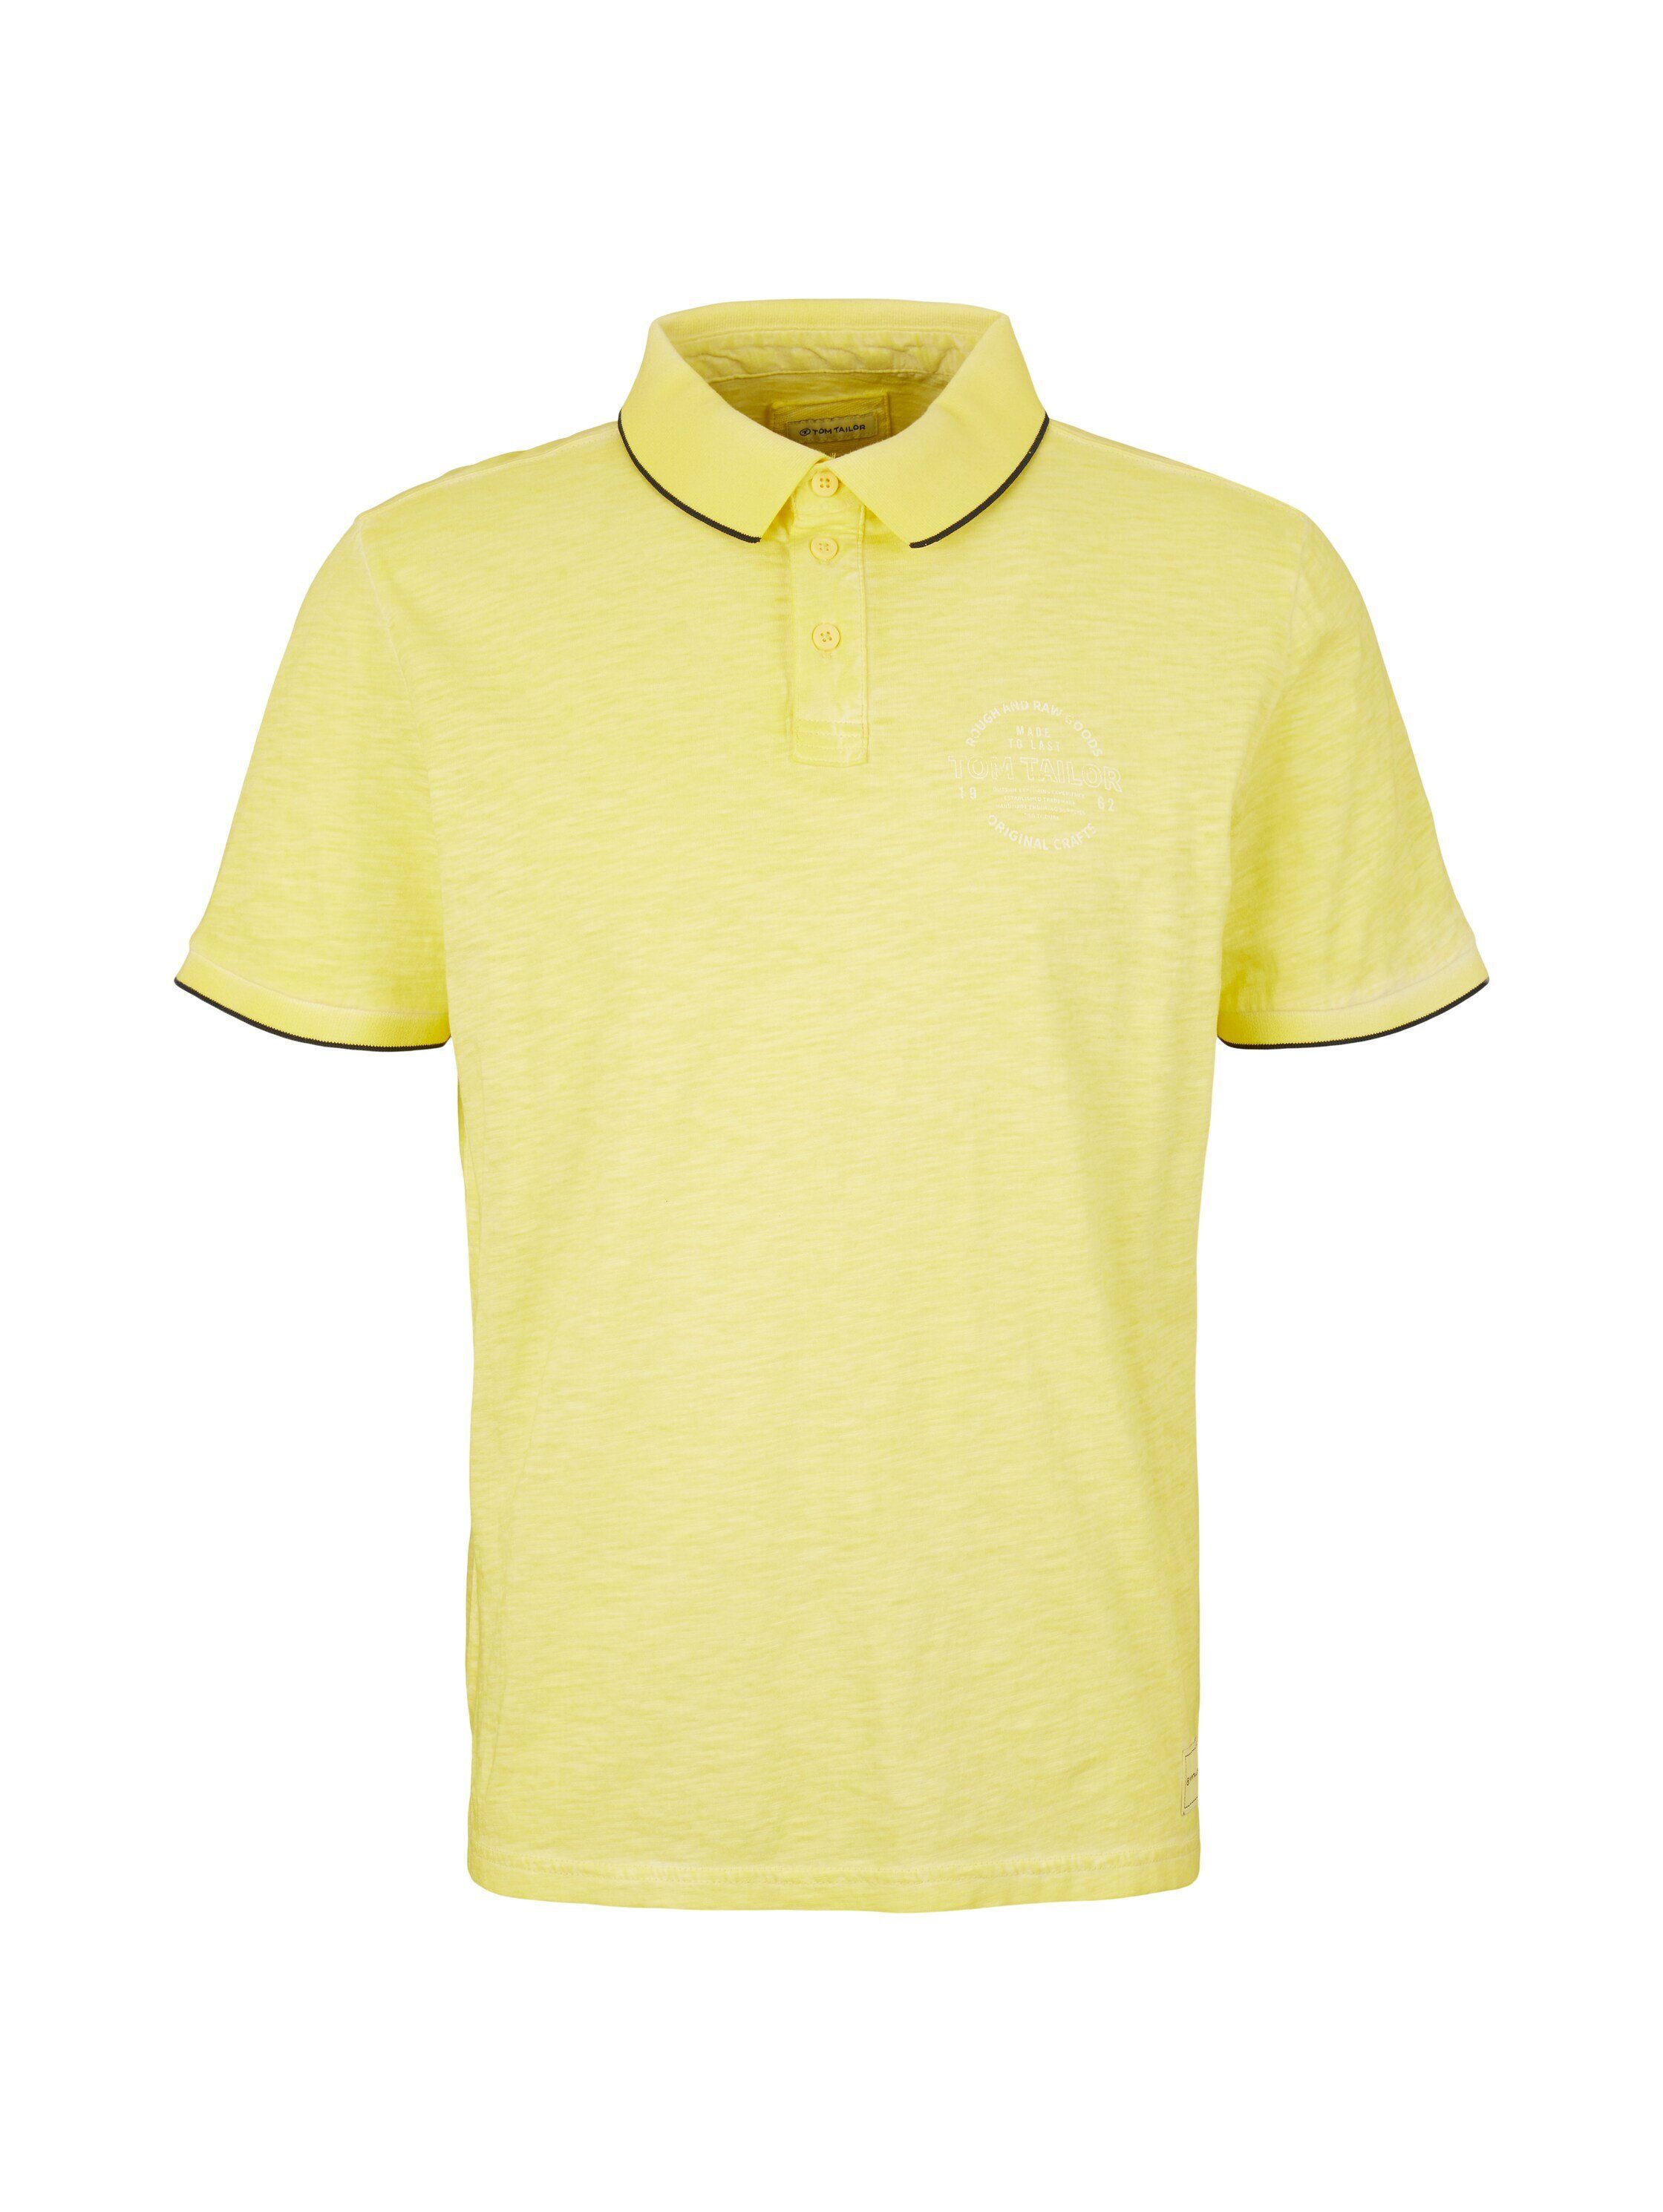 Poloshirt halber Print gelb Logo und Shirt TOM Poloshirt TAILOR mit